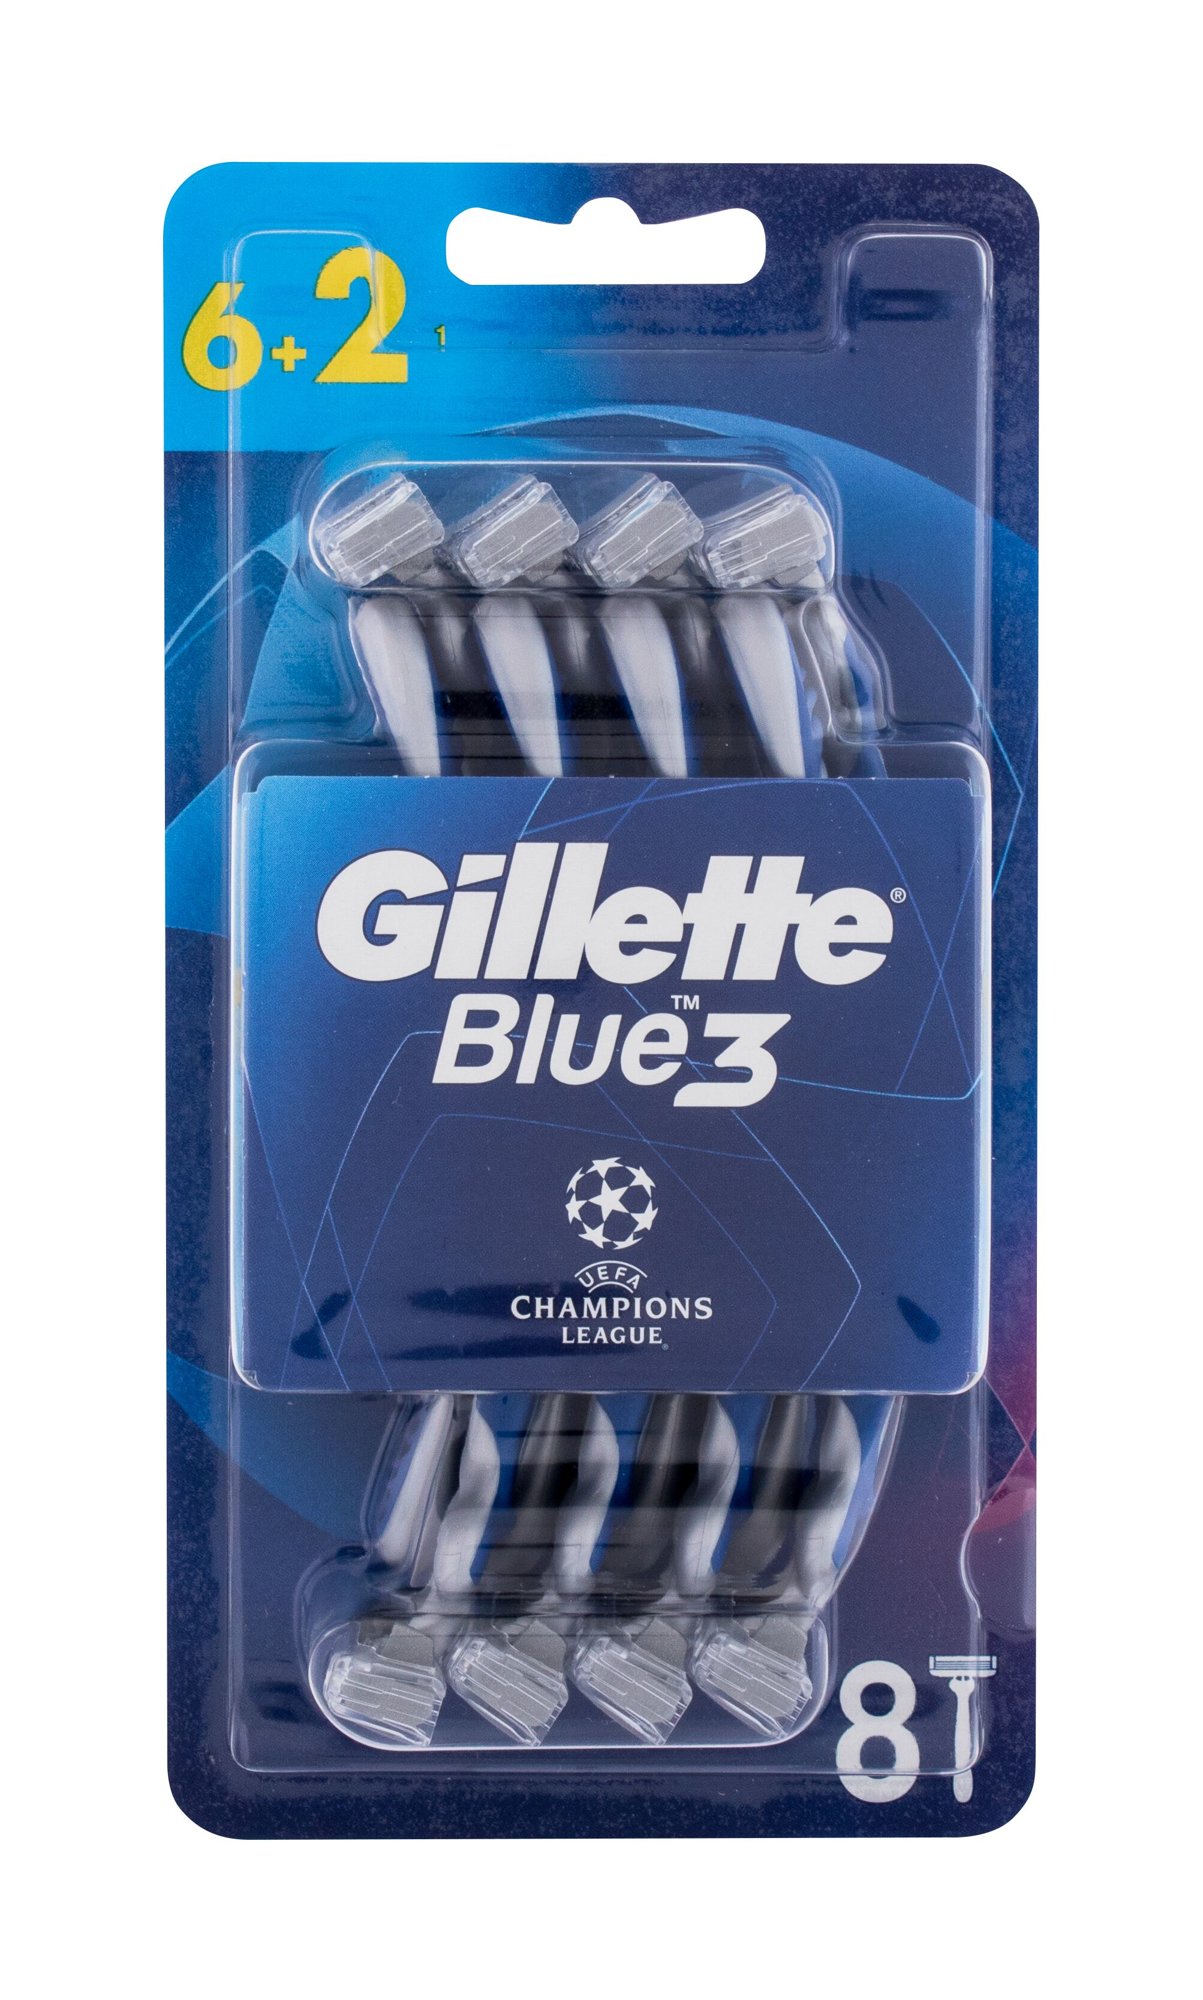 Gillette Blue3 Comfort skustuvas